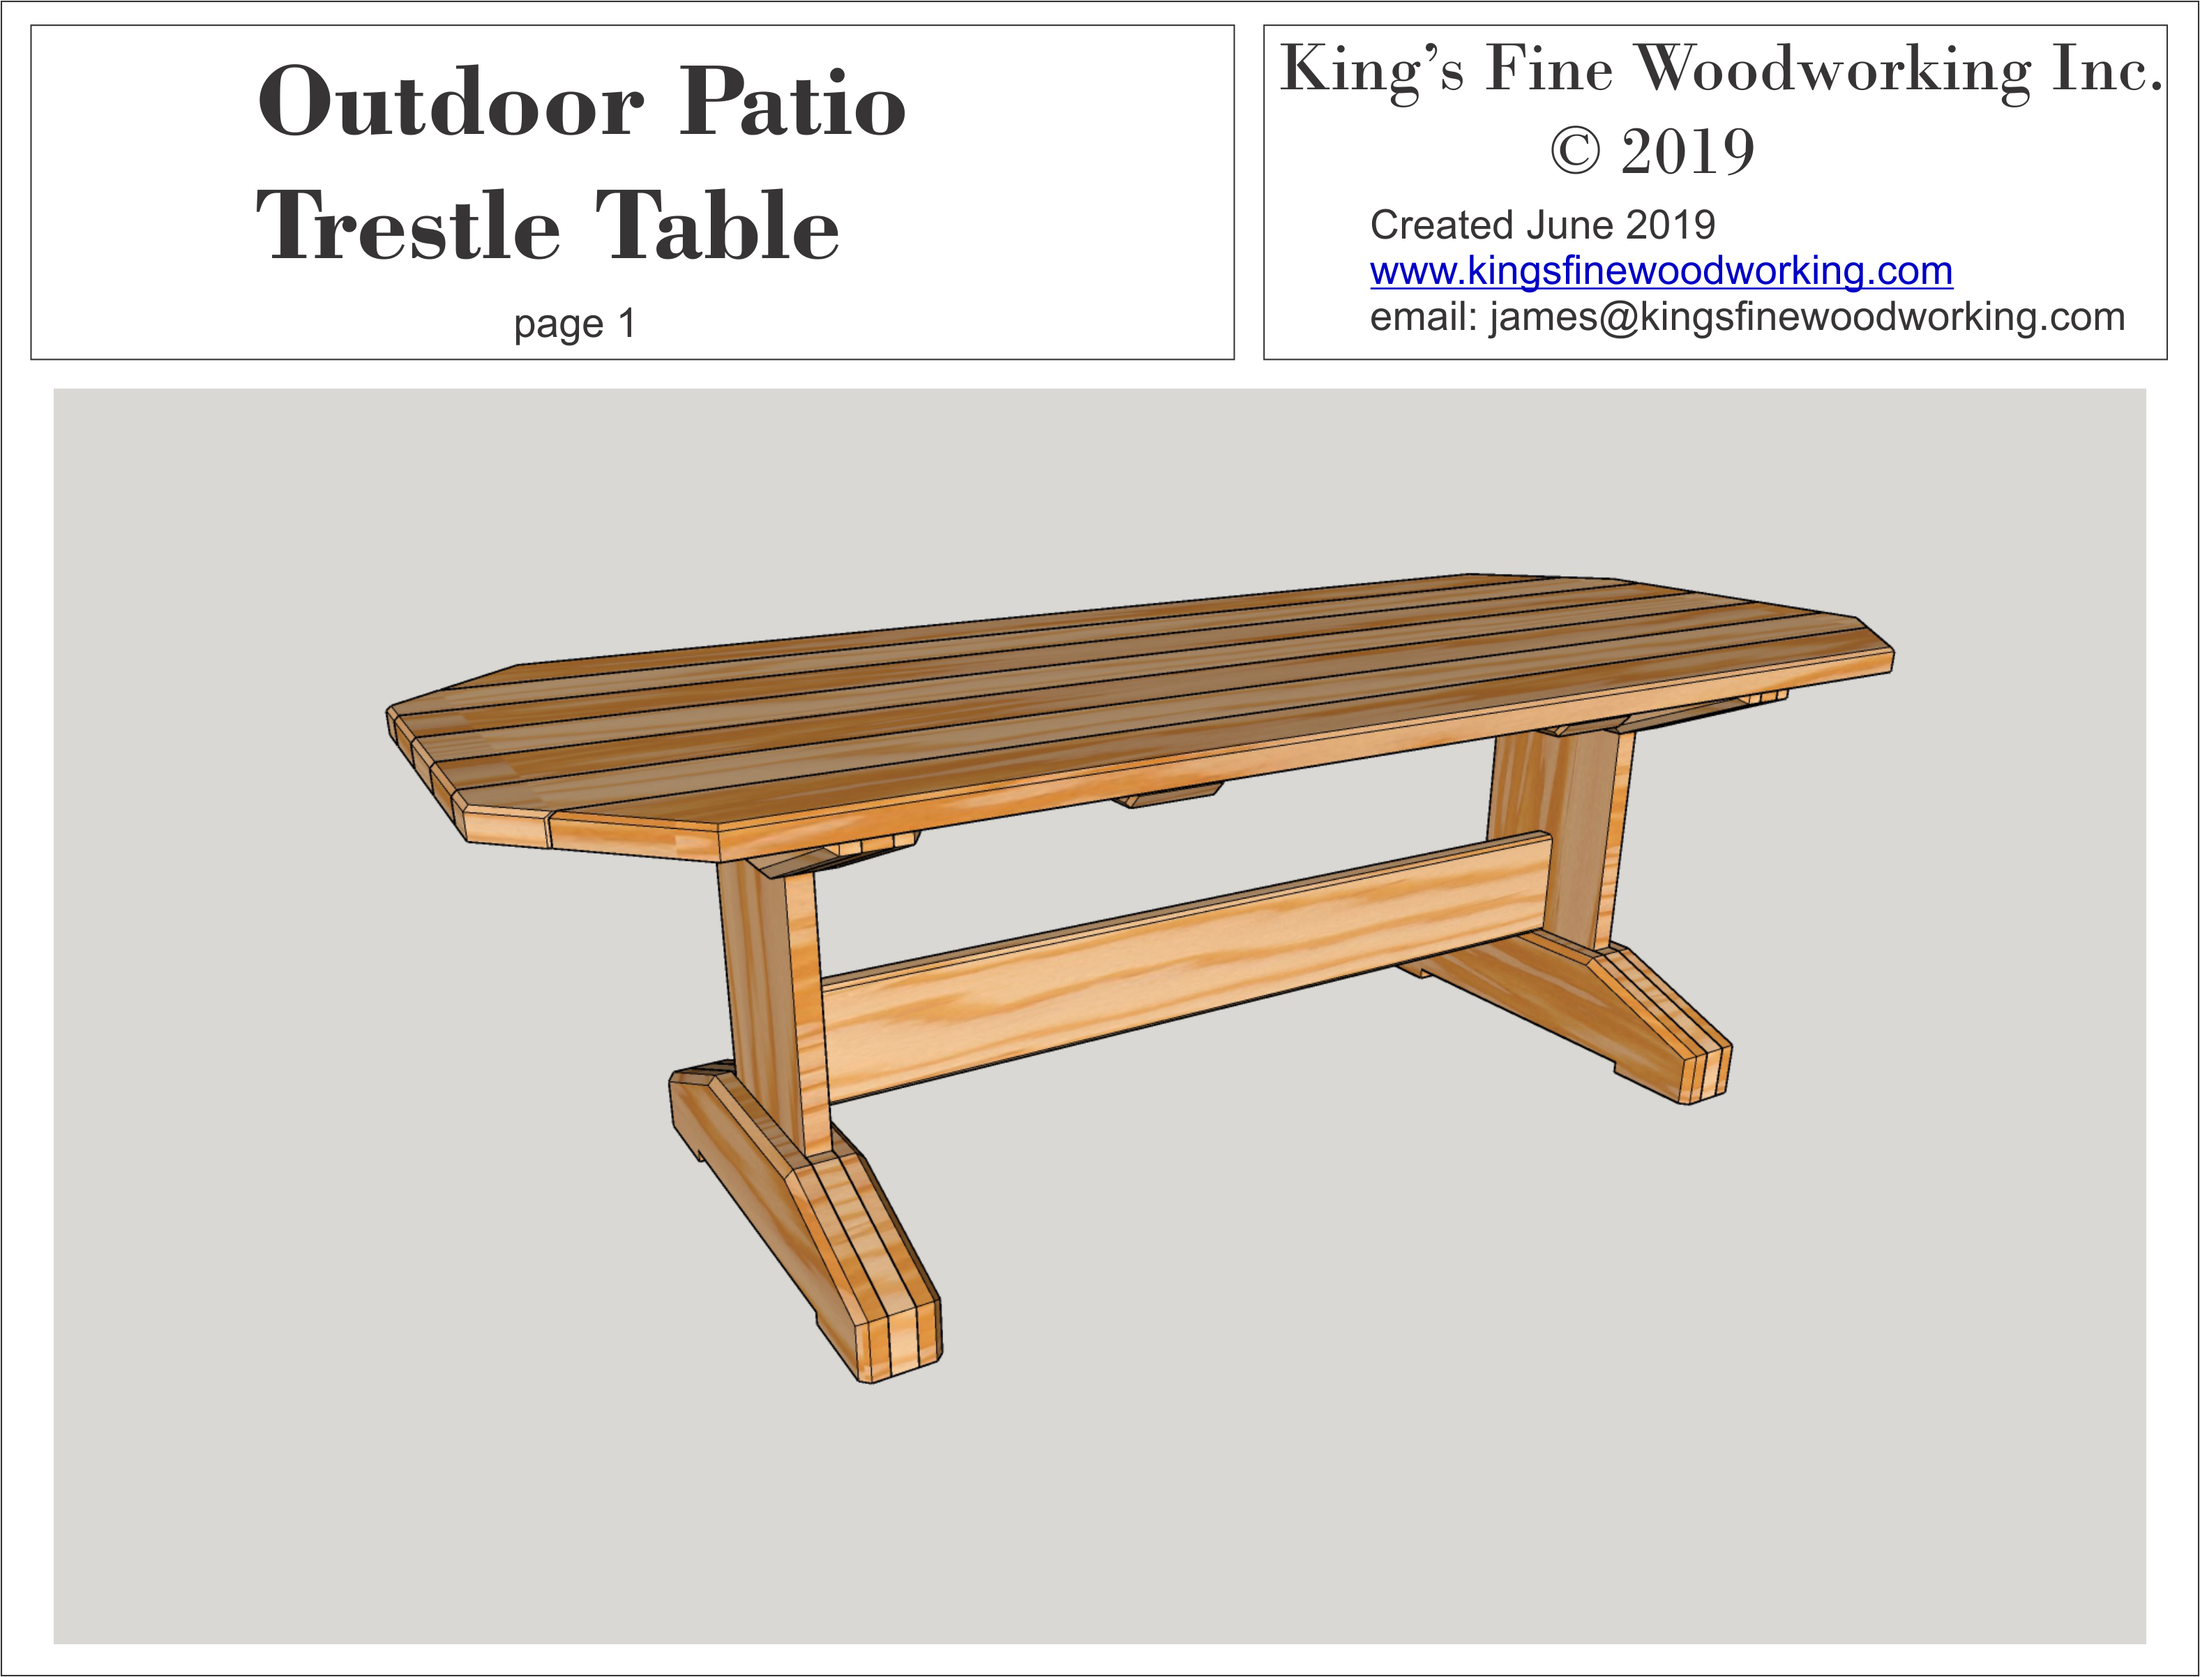 Ultimate Outdoor Furniture & Adirondack Package